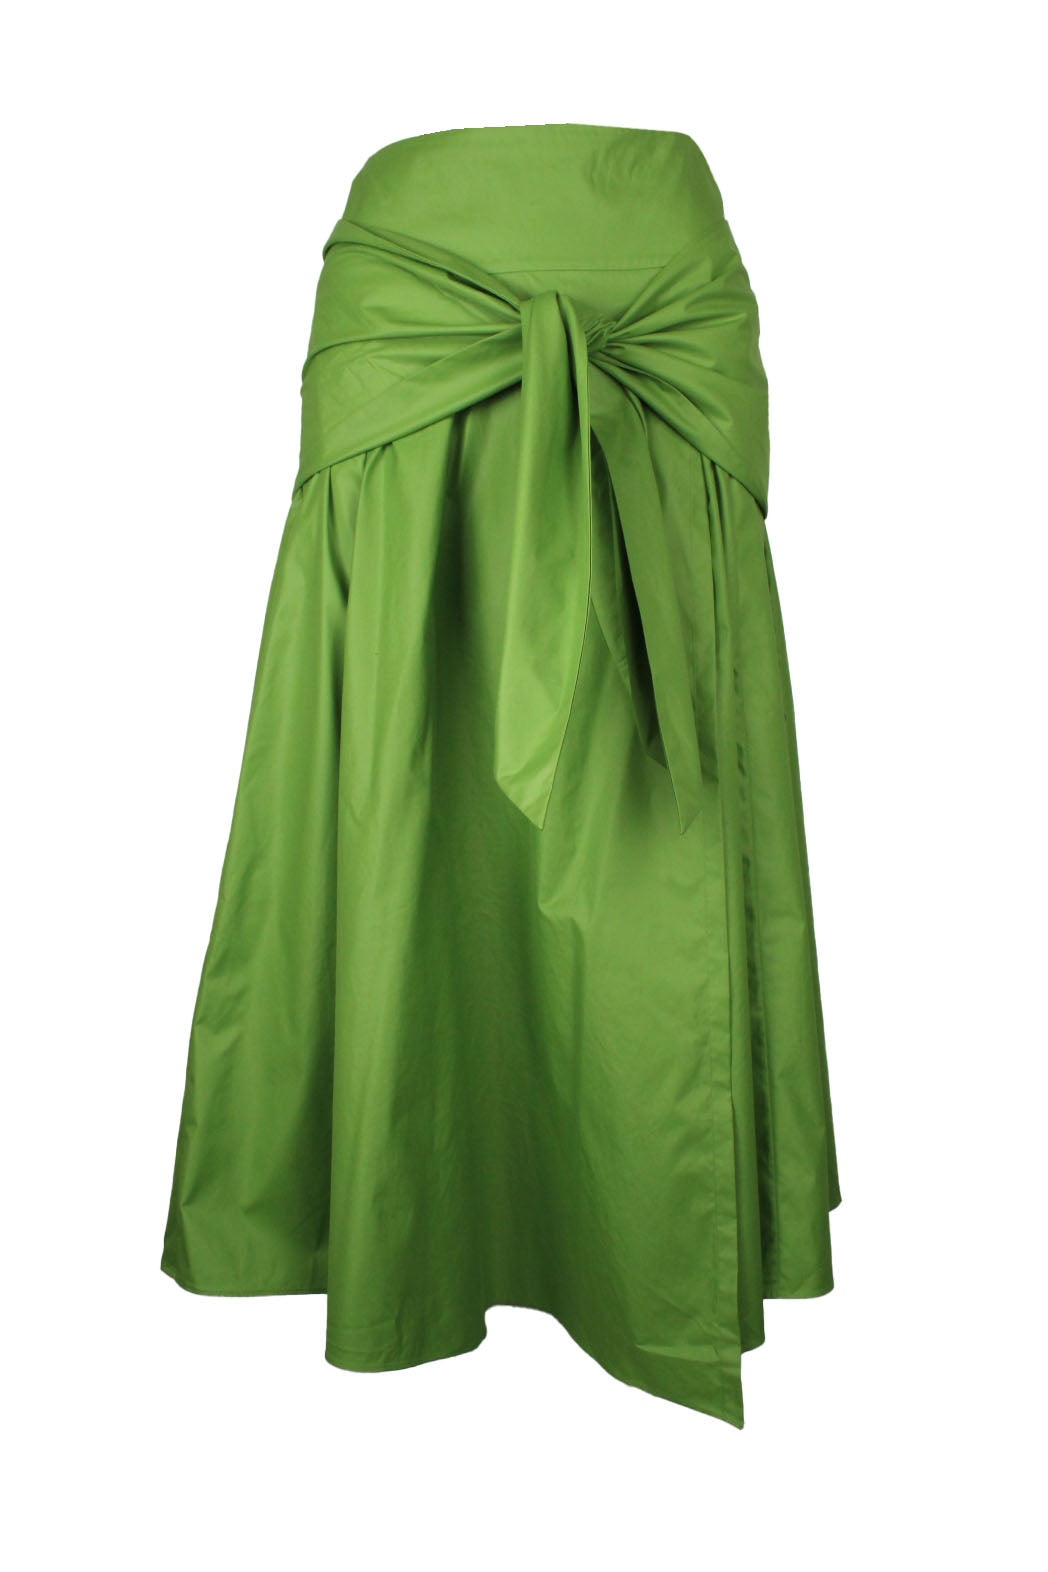 description: tibi green tie front midi skirt. features seamless waist, front tie accent, and left side zipper closure. 